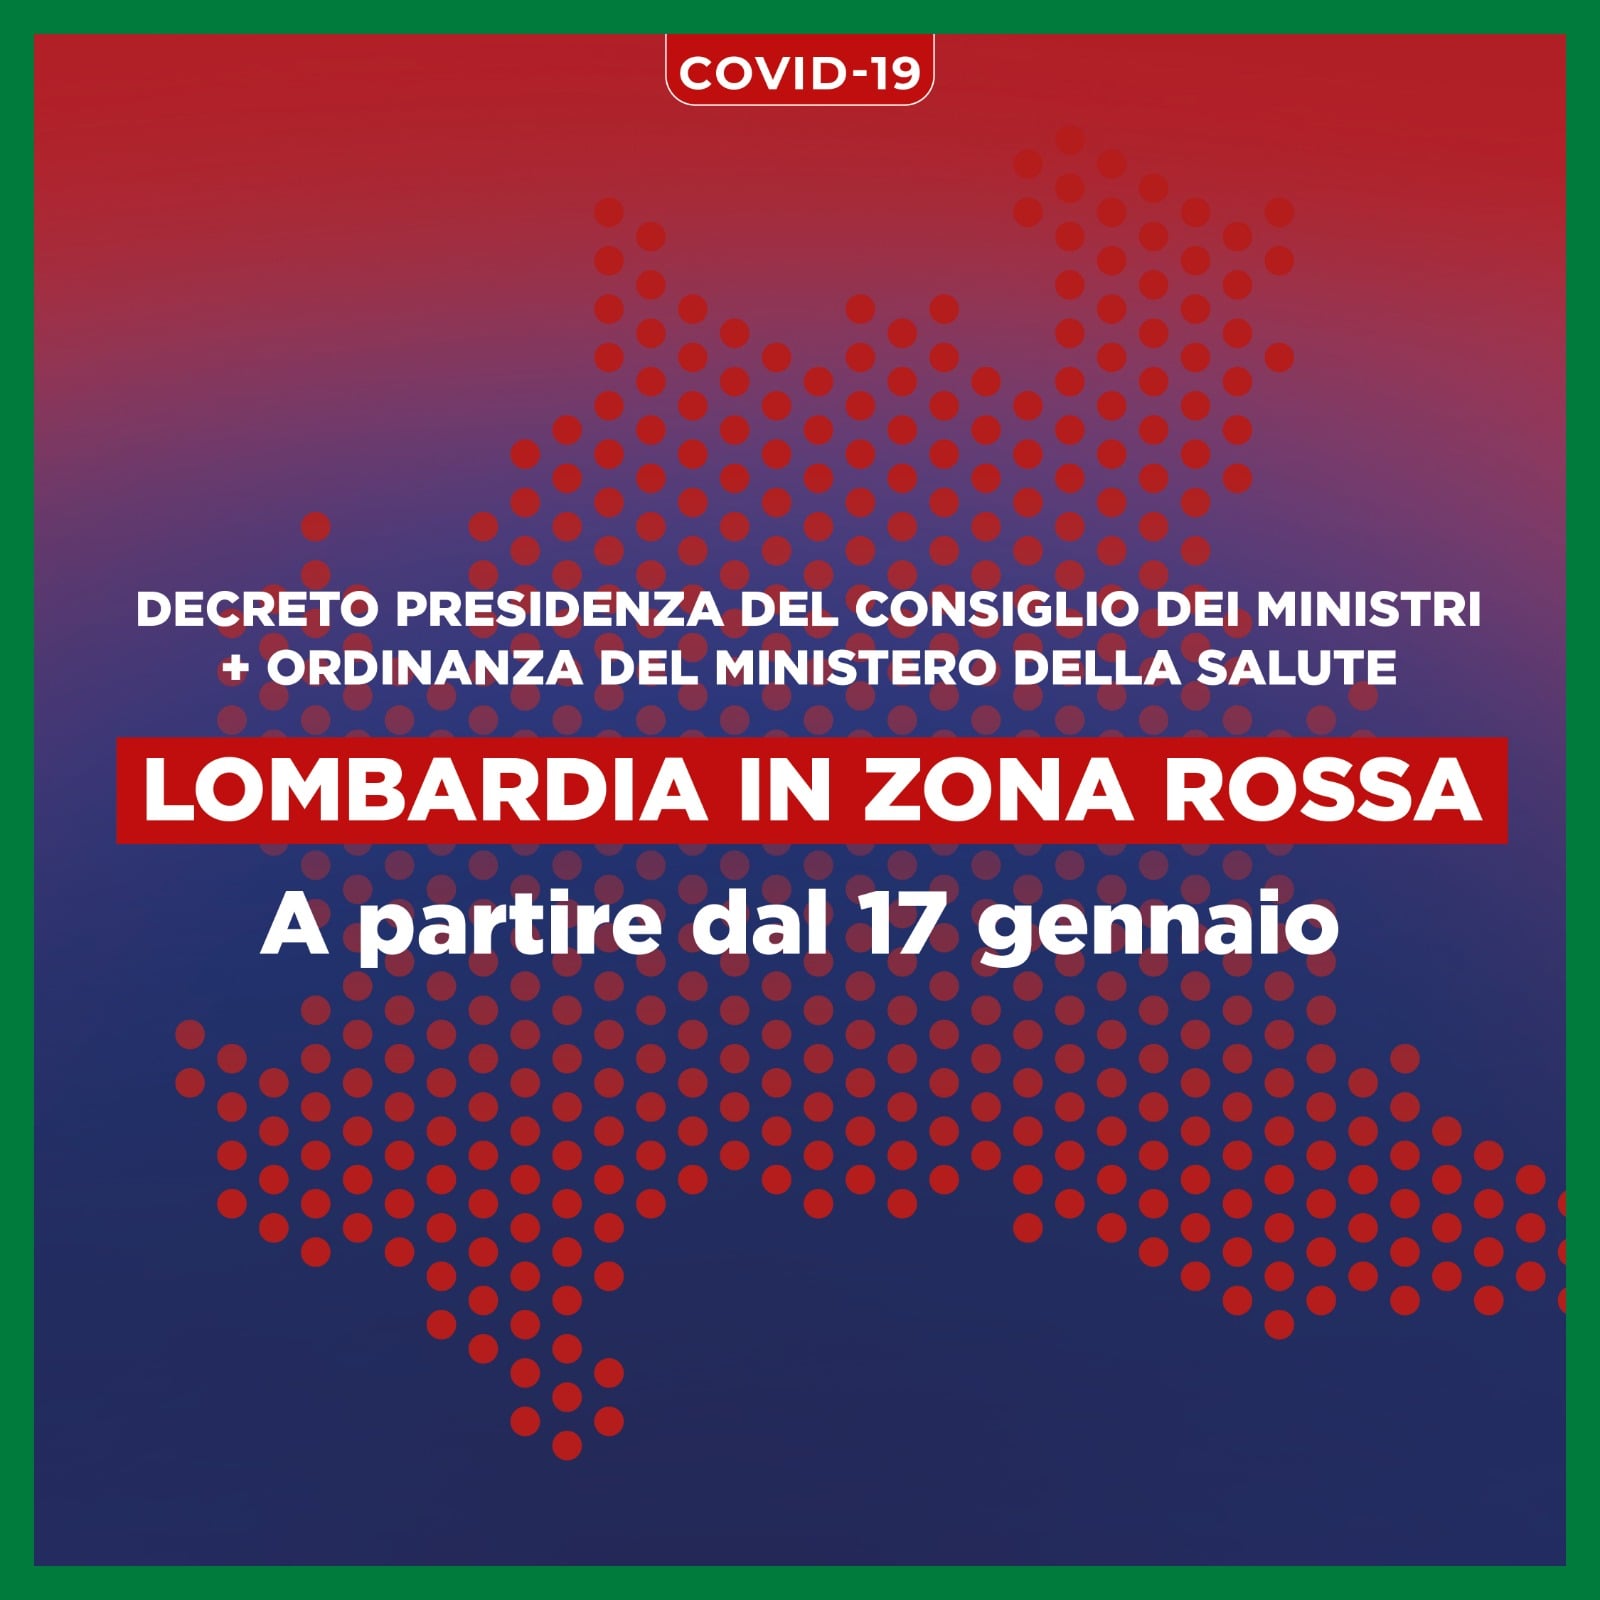 Coronavirus: Lombardia in zona rossa fino al 31 gennaio